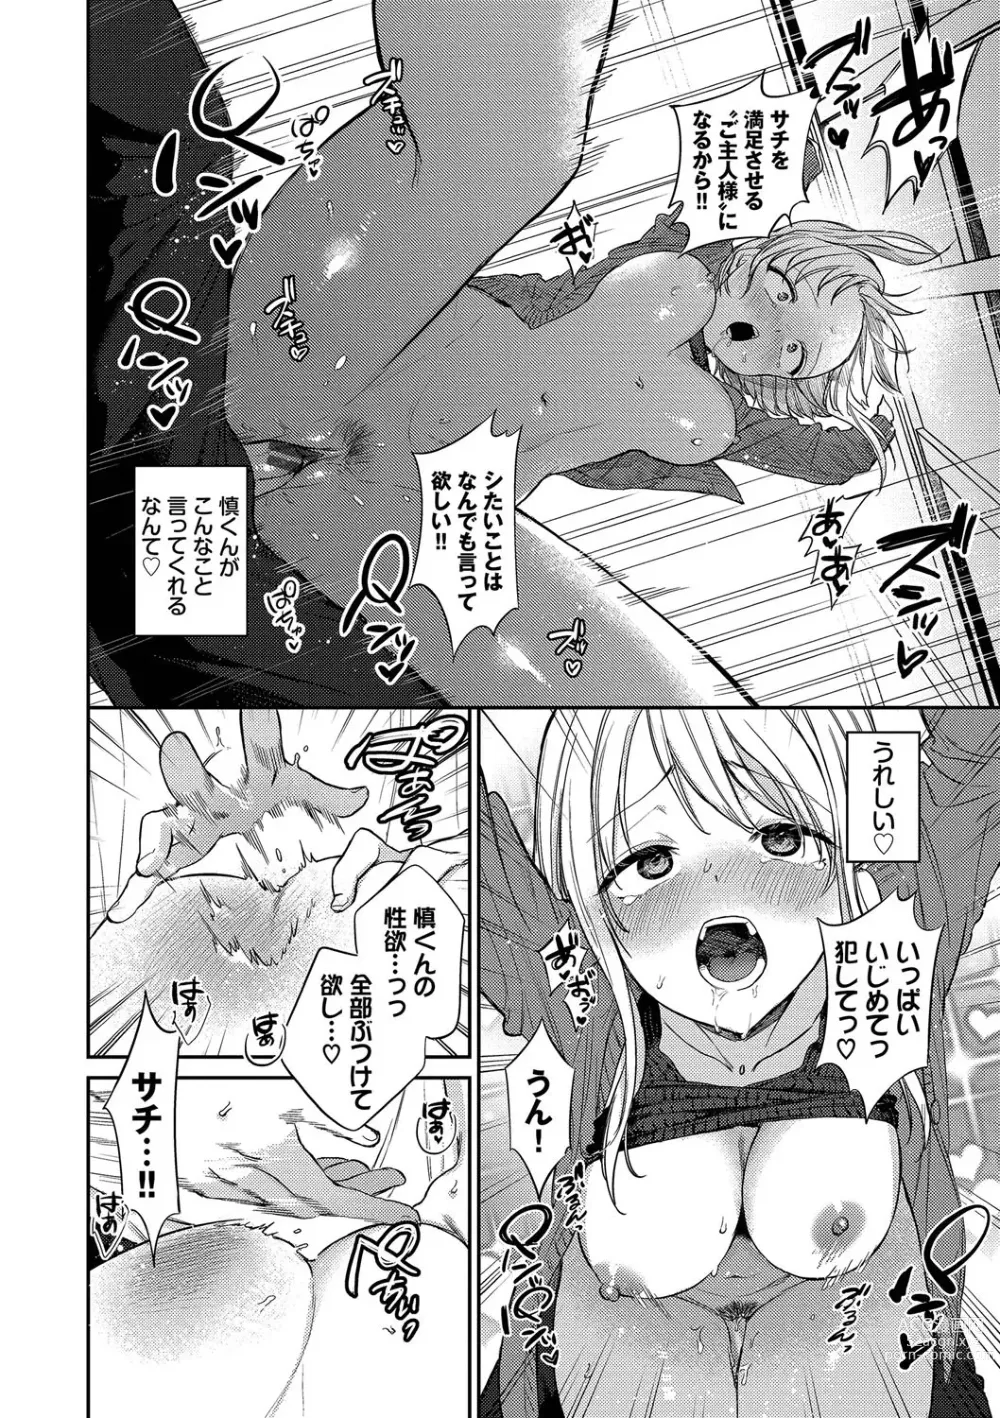 Page 193 of manga Mutsuri Bloom